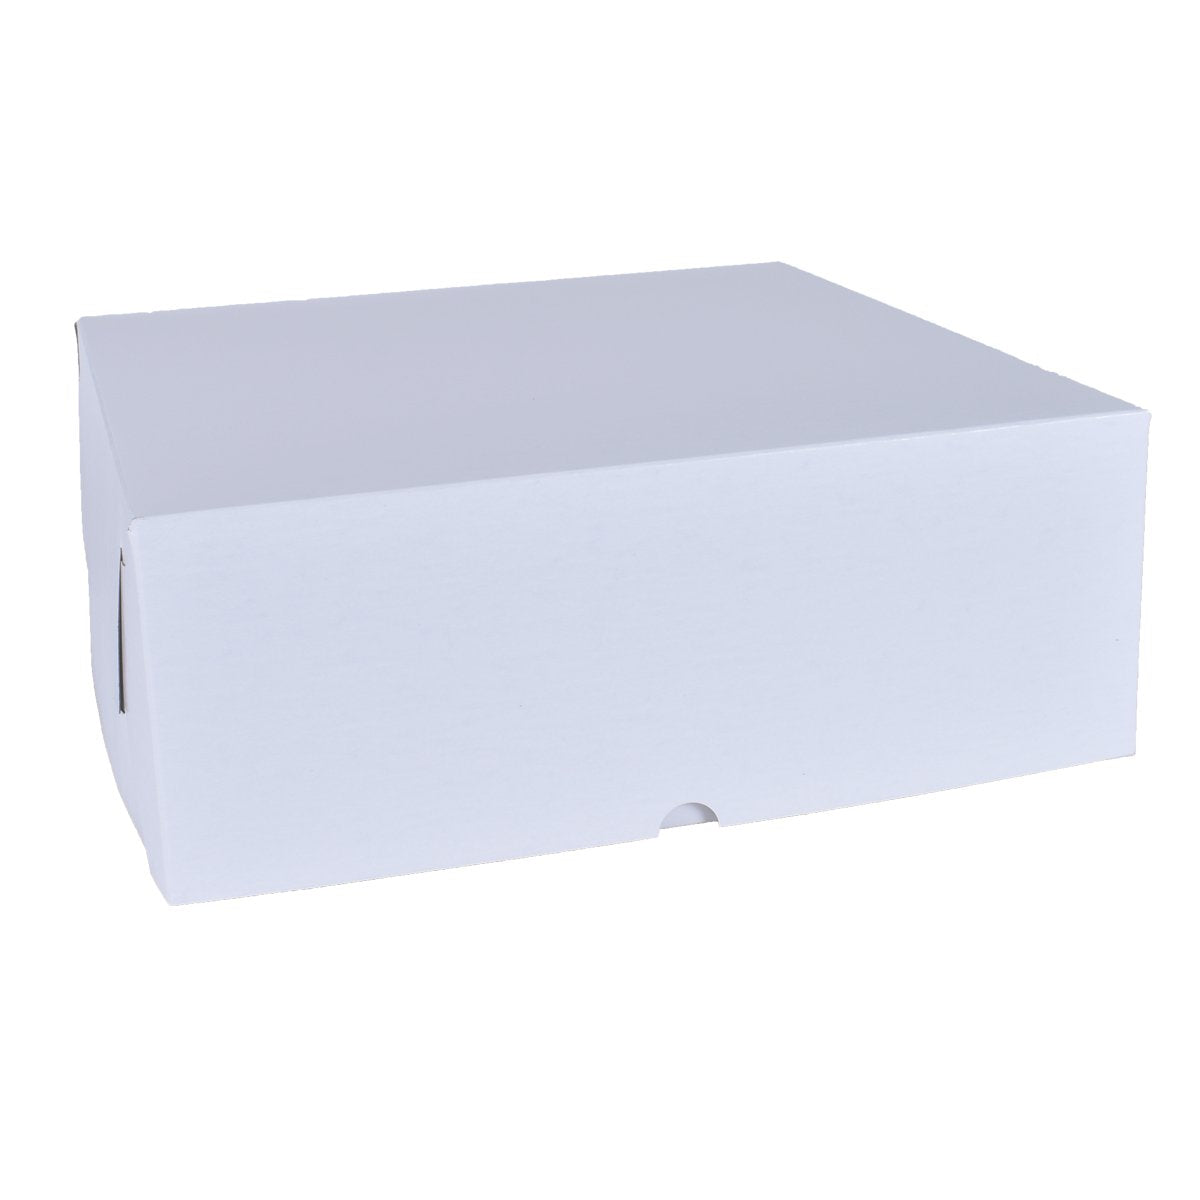 White Cake Boxes - 10x10x4 Bake Supply Plus Box - Bake Supply Plus